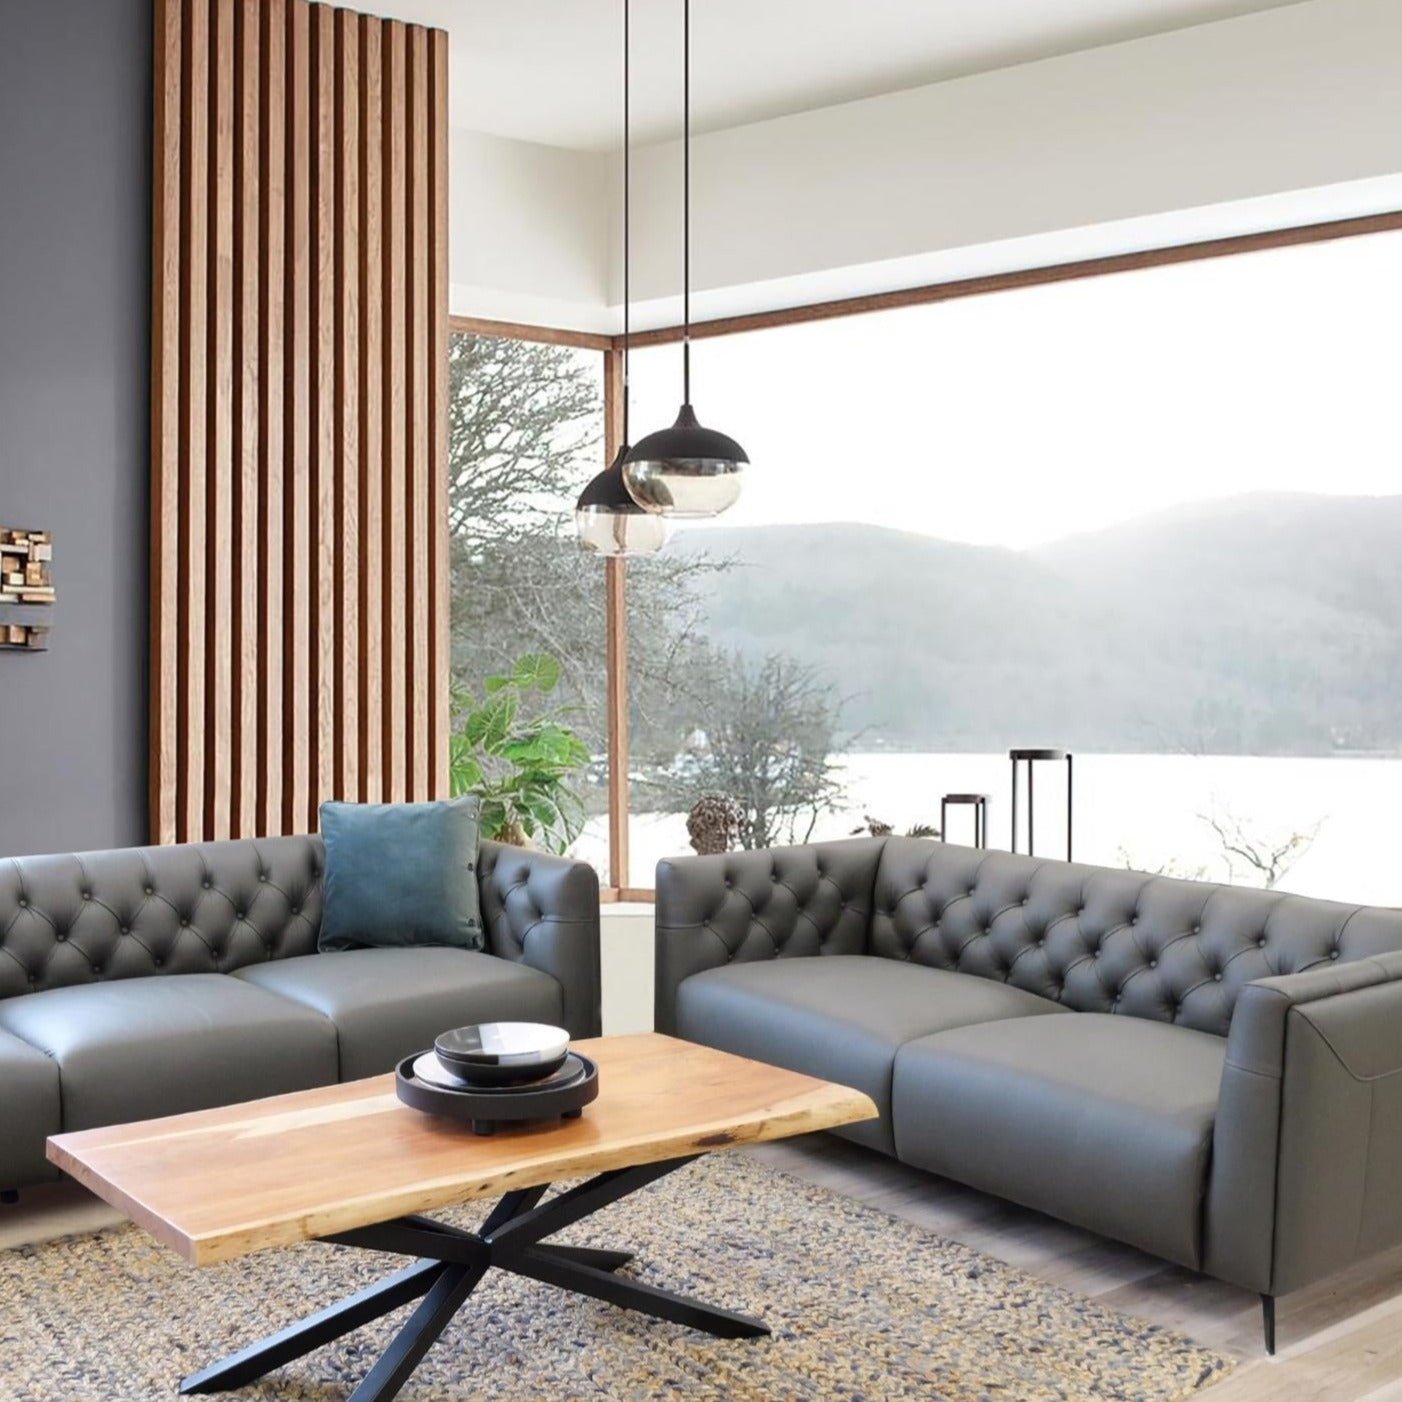 Luxe 2pc Genuine Forli Leather Sofa Set 2.5-3.5 Seater -Dark Grey